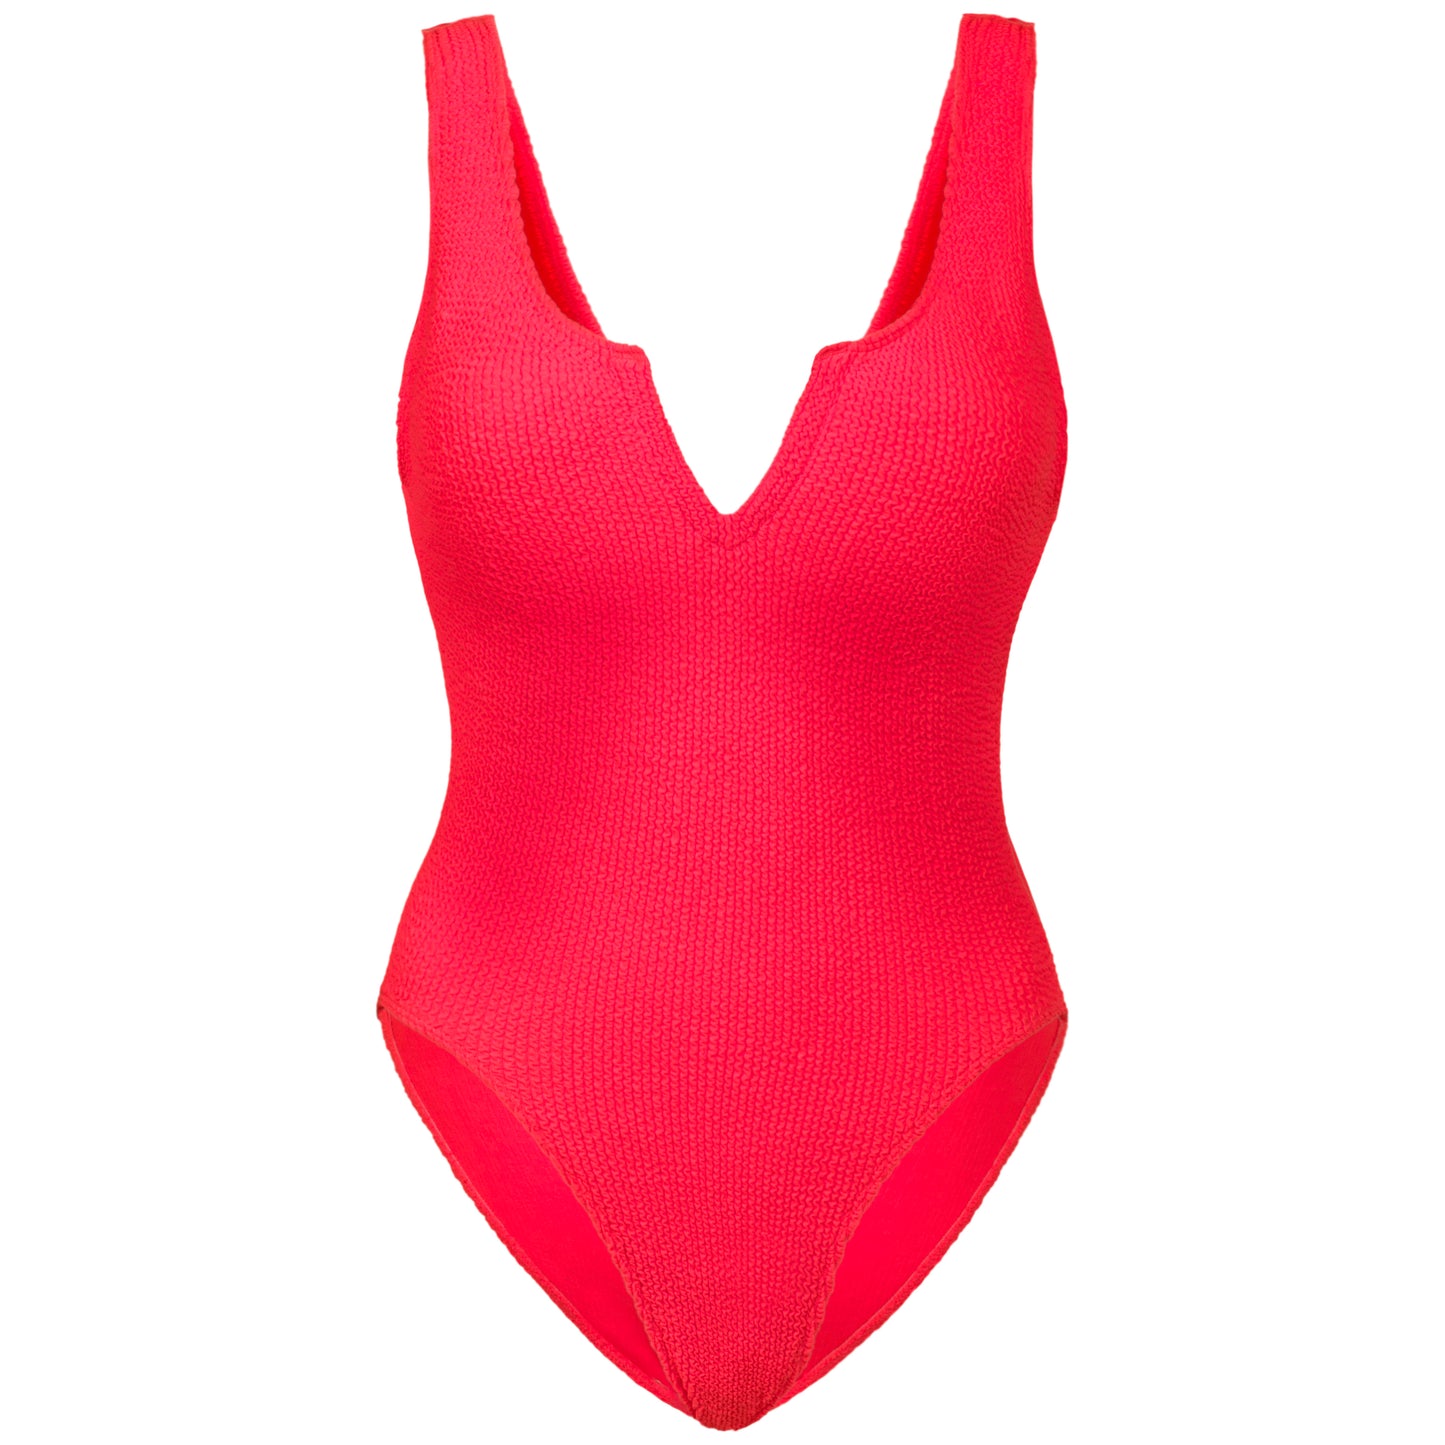 Designer Swimming Costume in Neon Pink - Ava Strawberry